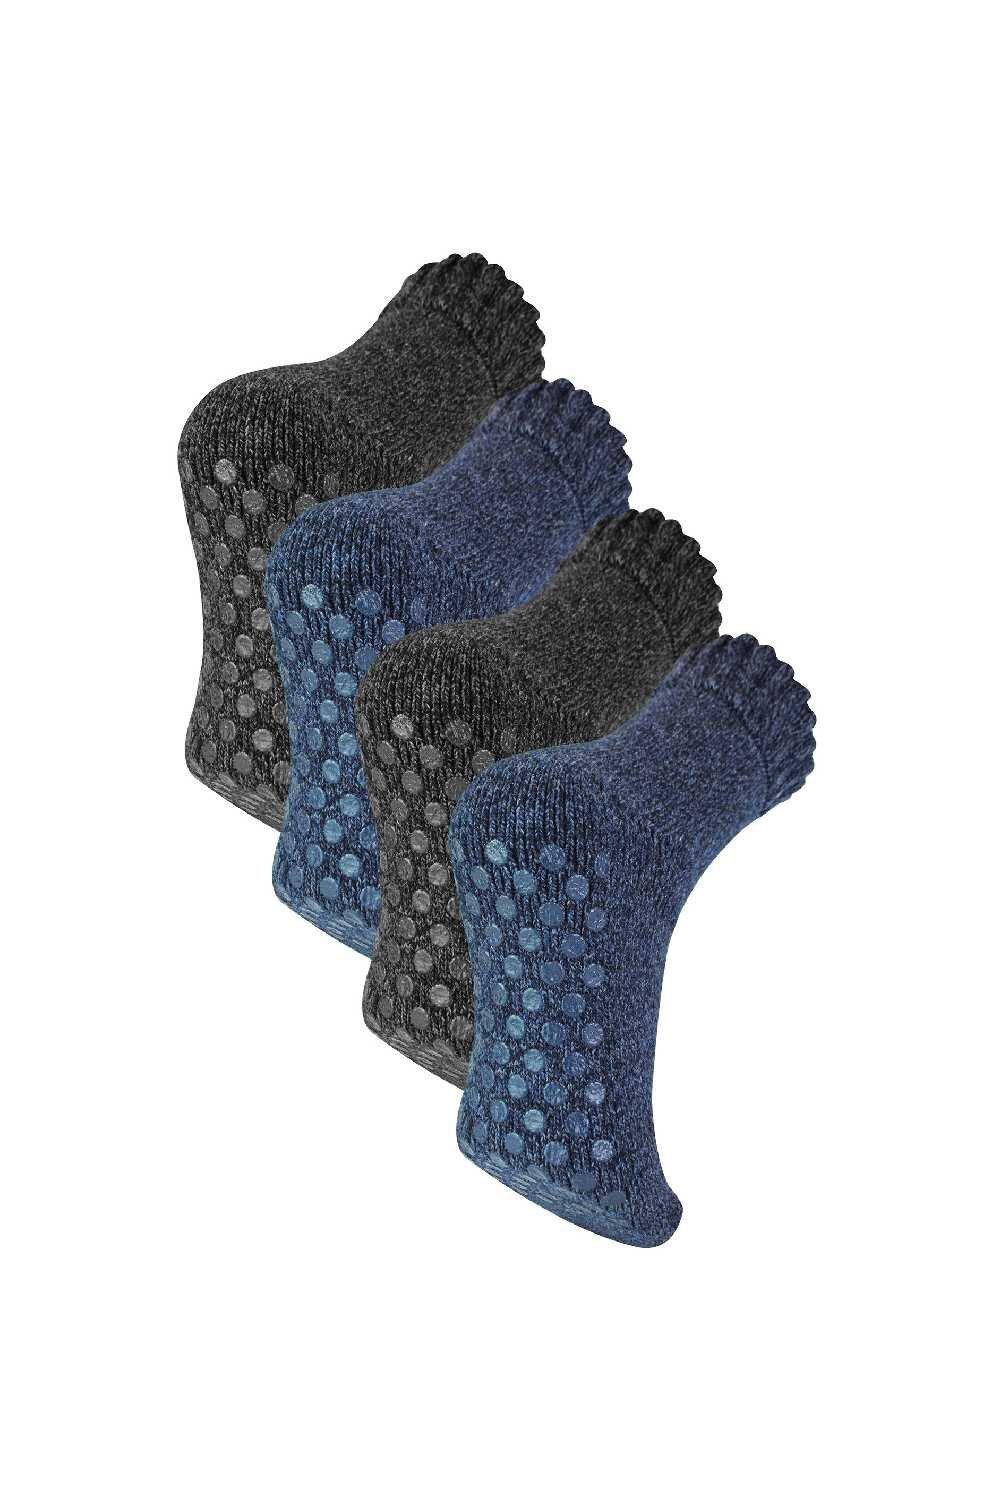 4 Pairs Merino Wool Slipper Socks - Warm Thick Wool Socks